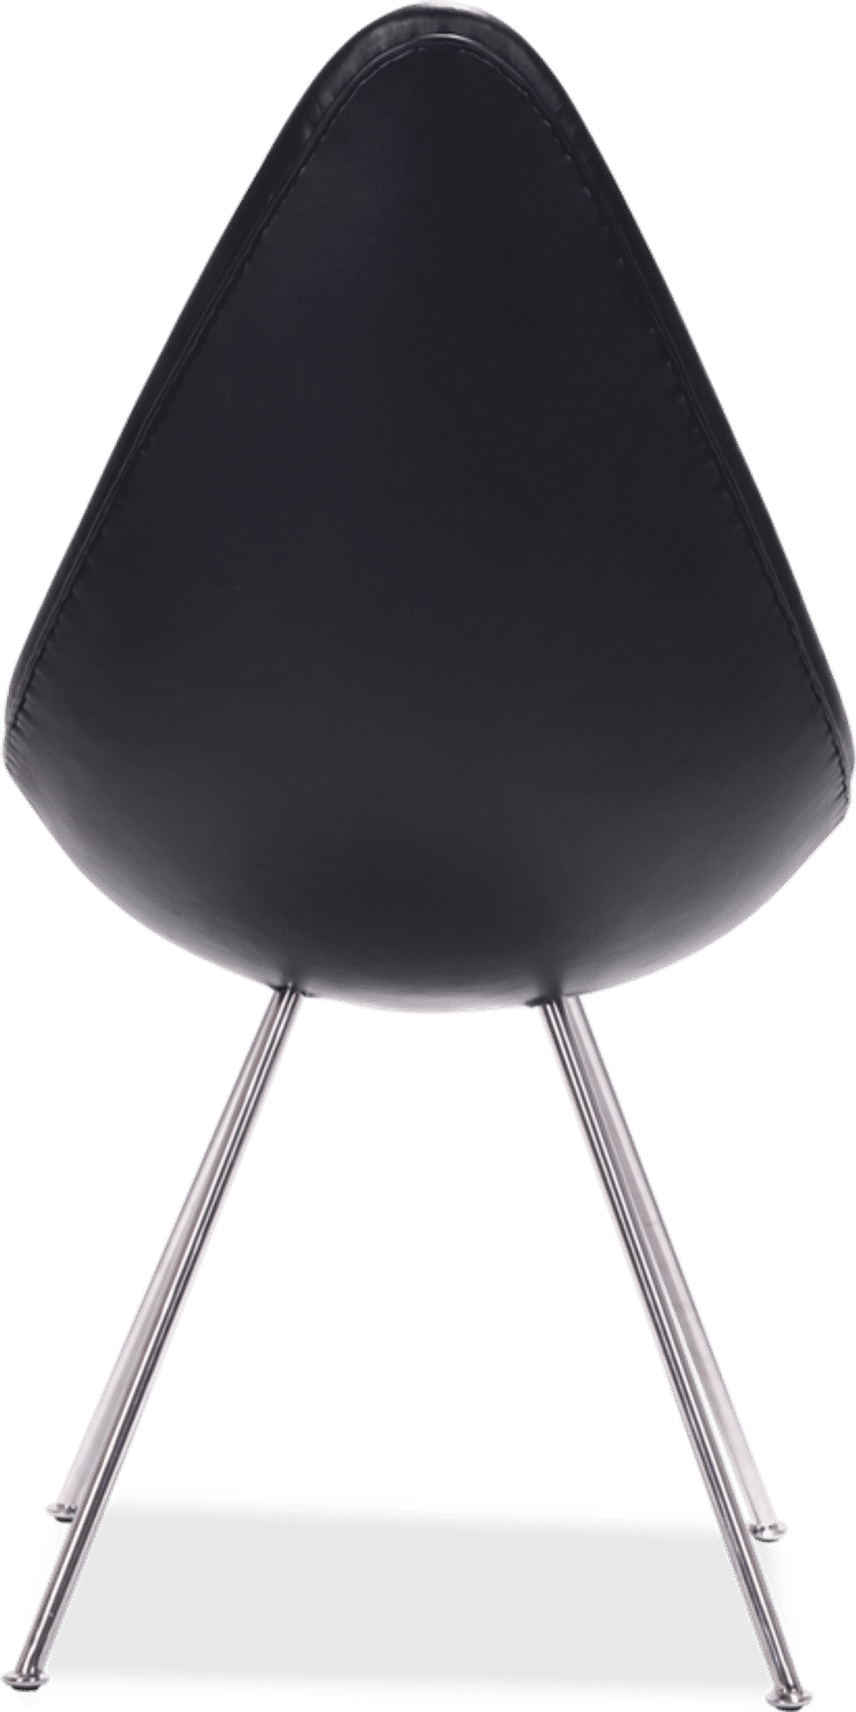 Drop Chair Premium Leather/Black  image.